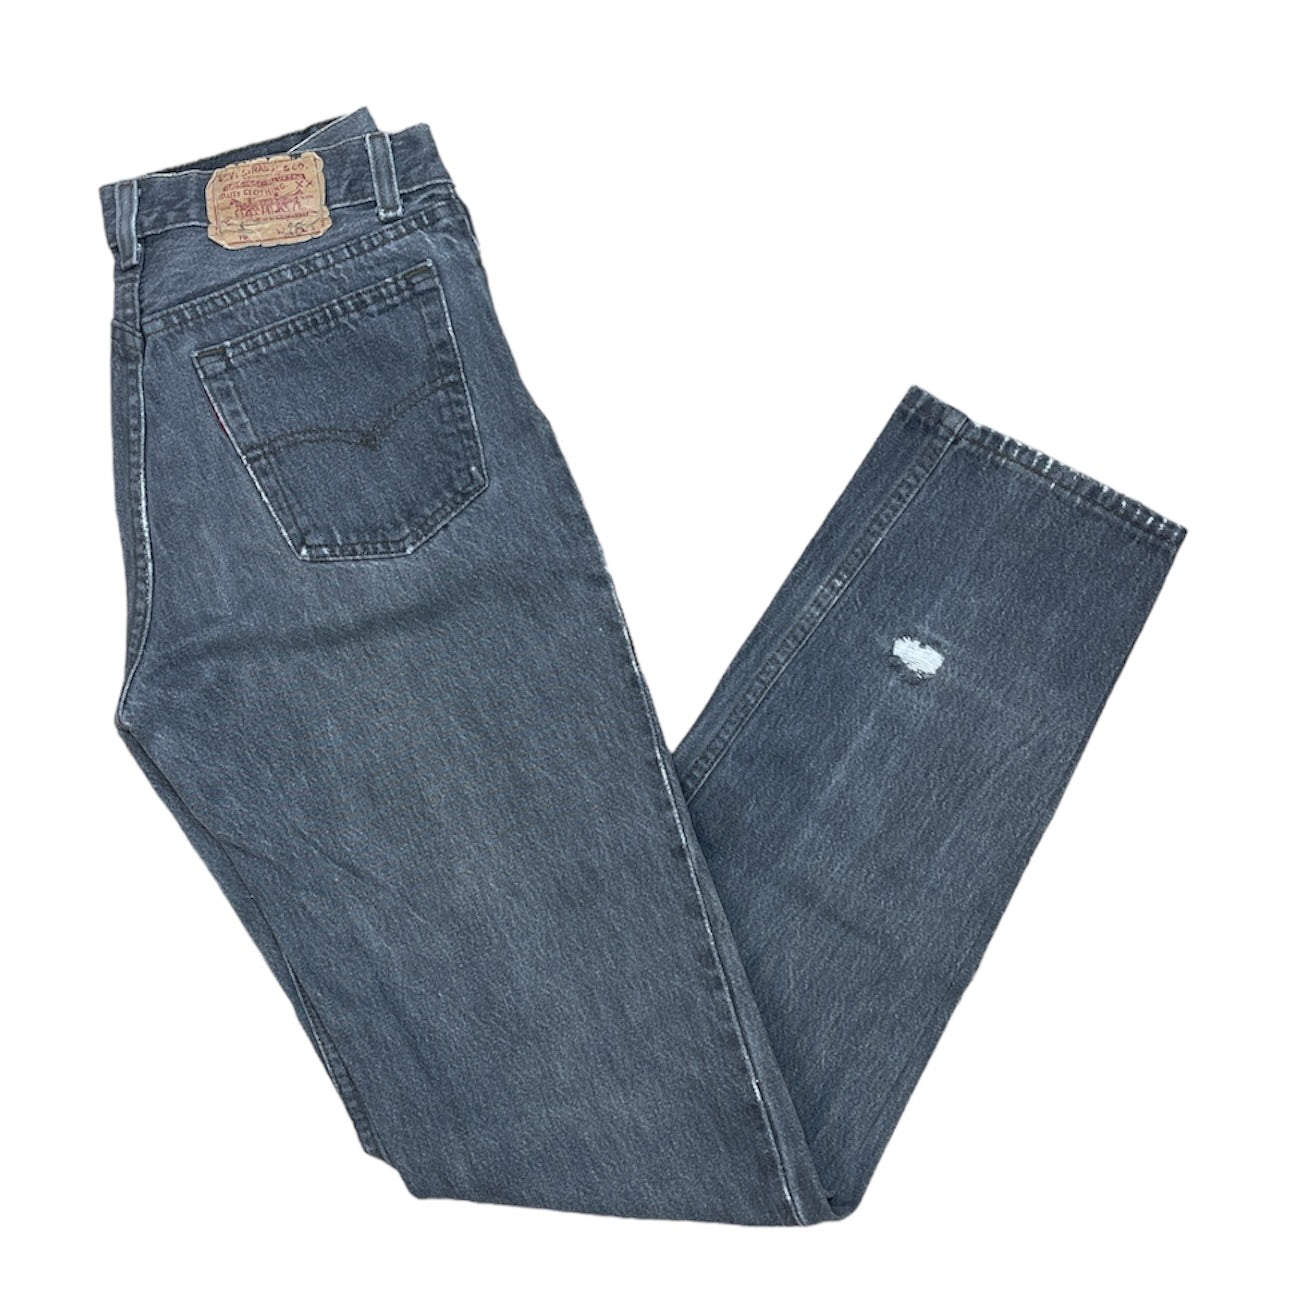 Vintage Levis 701 Vintage Grey Jeans (W28/L34)